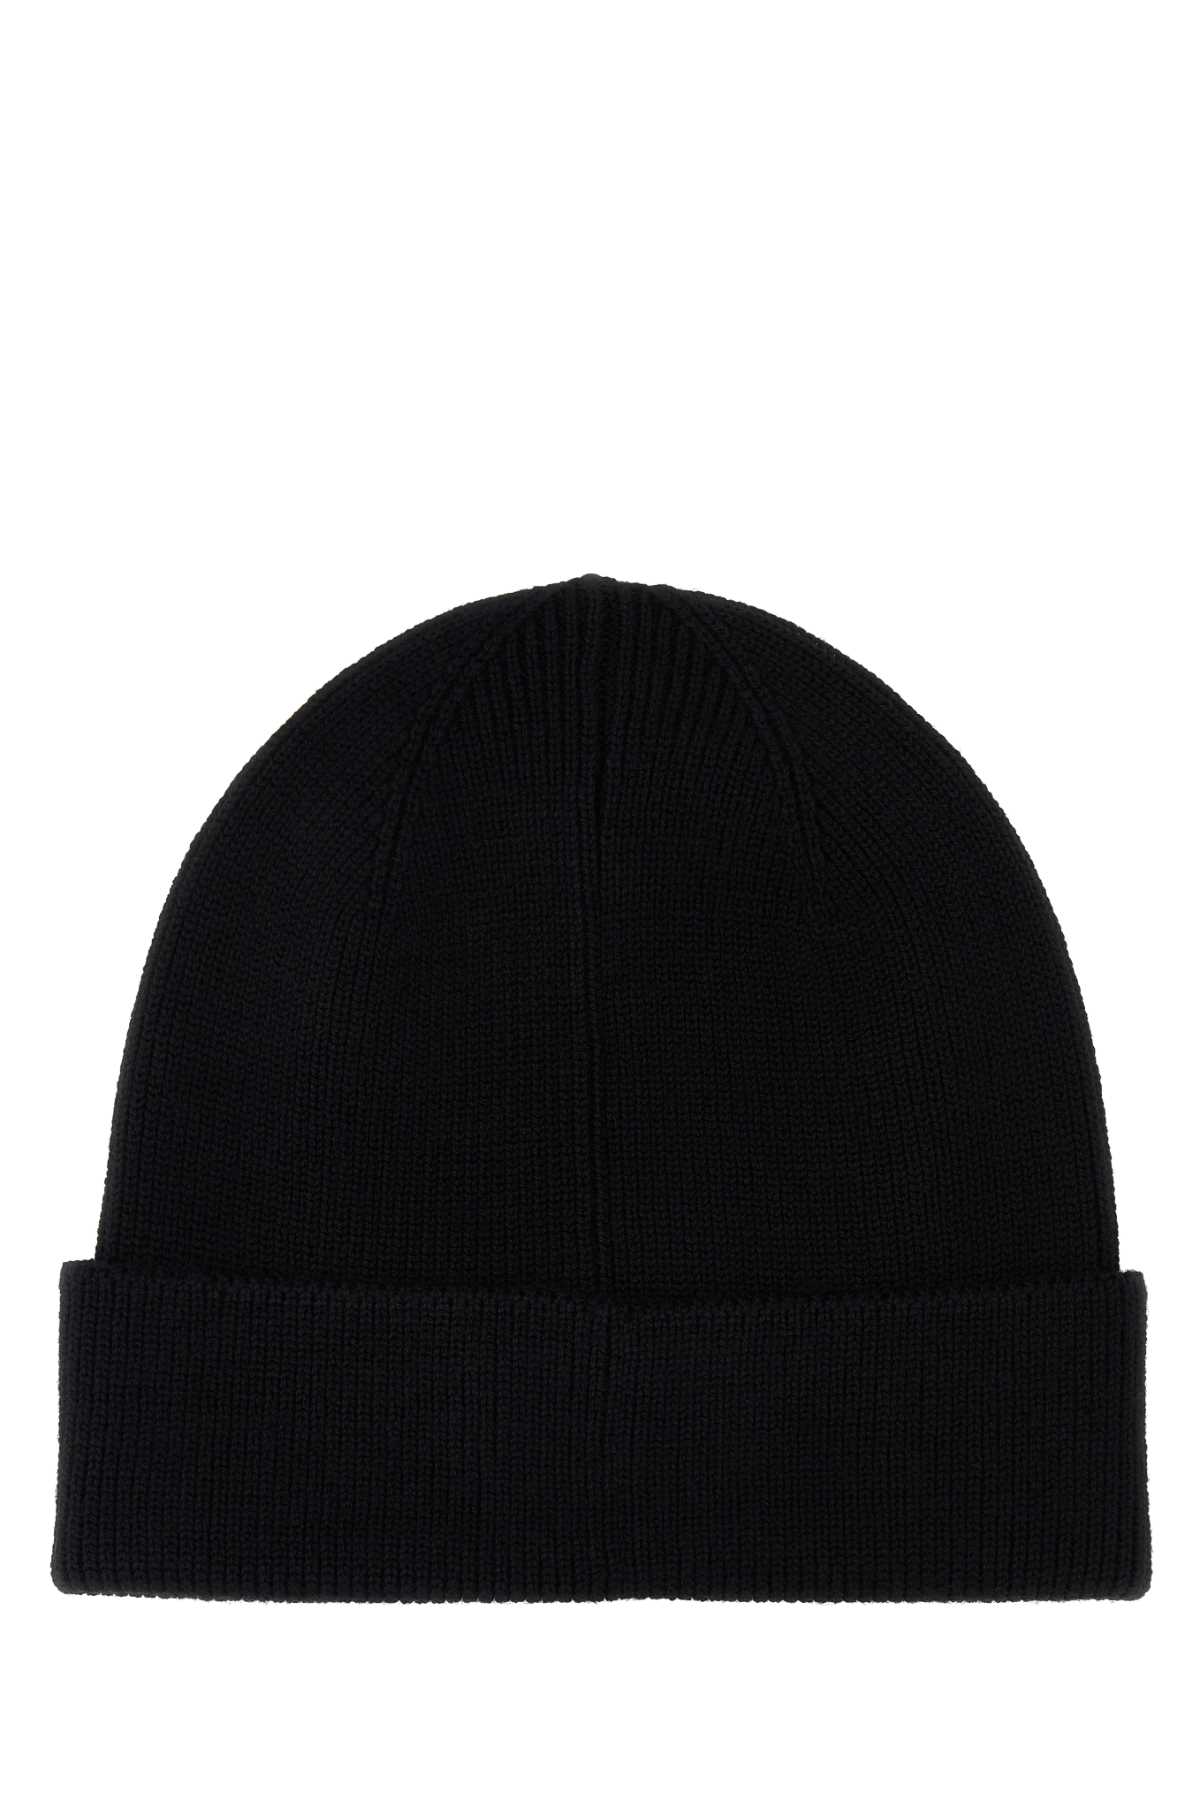 Etudes Studio Black Wool Blend Beanie Hat